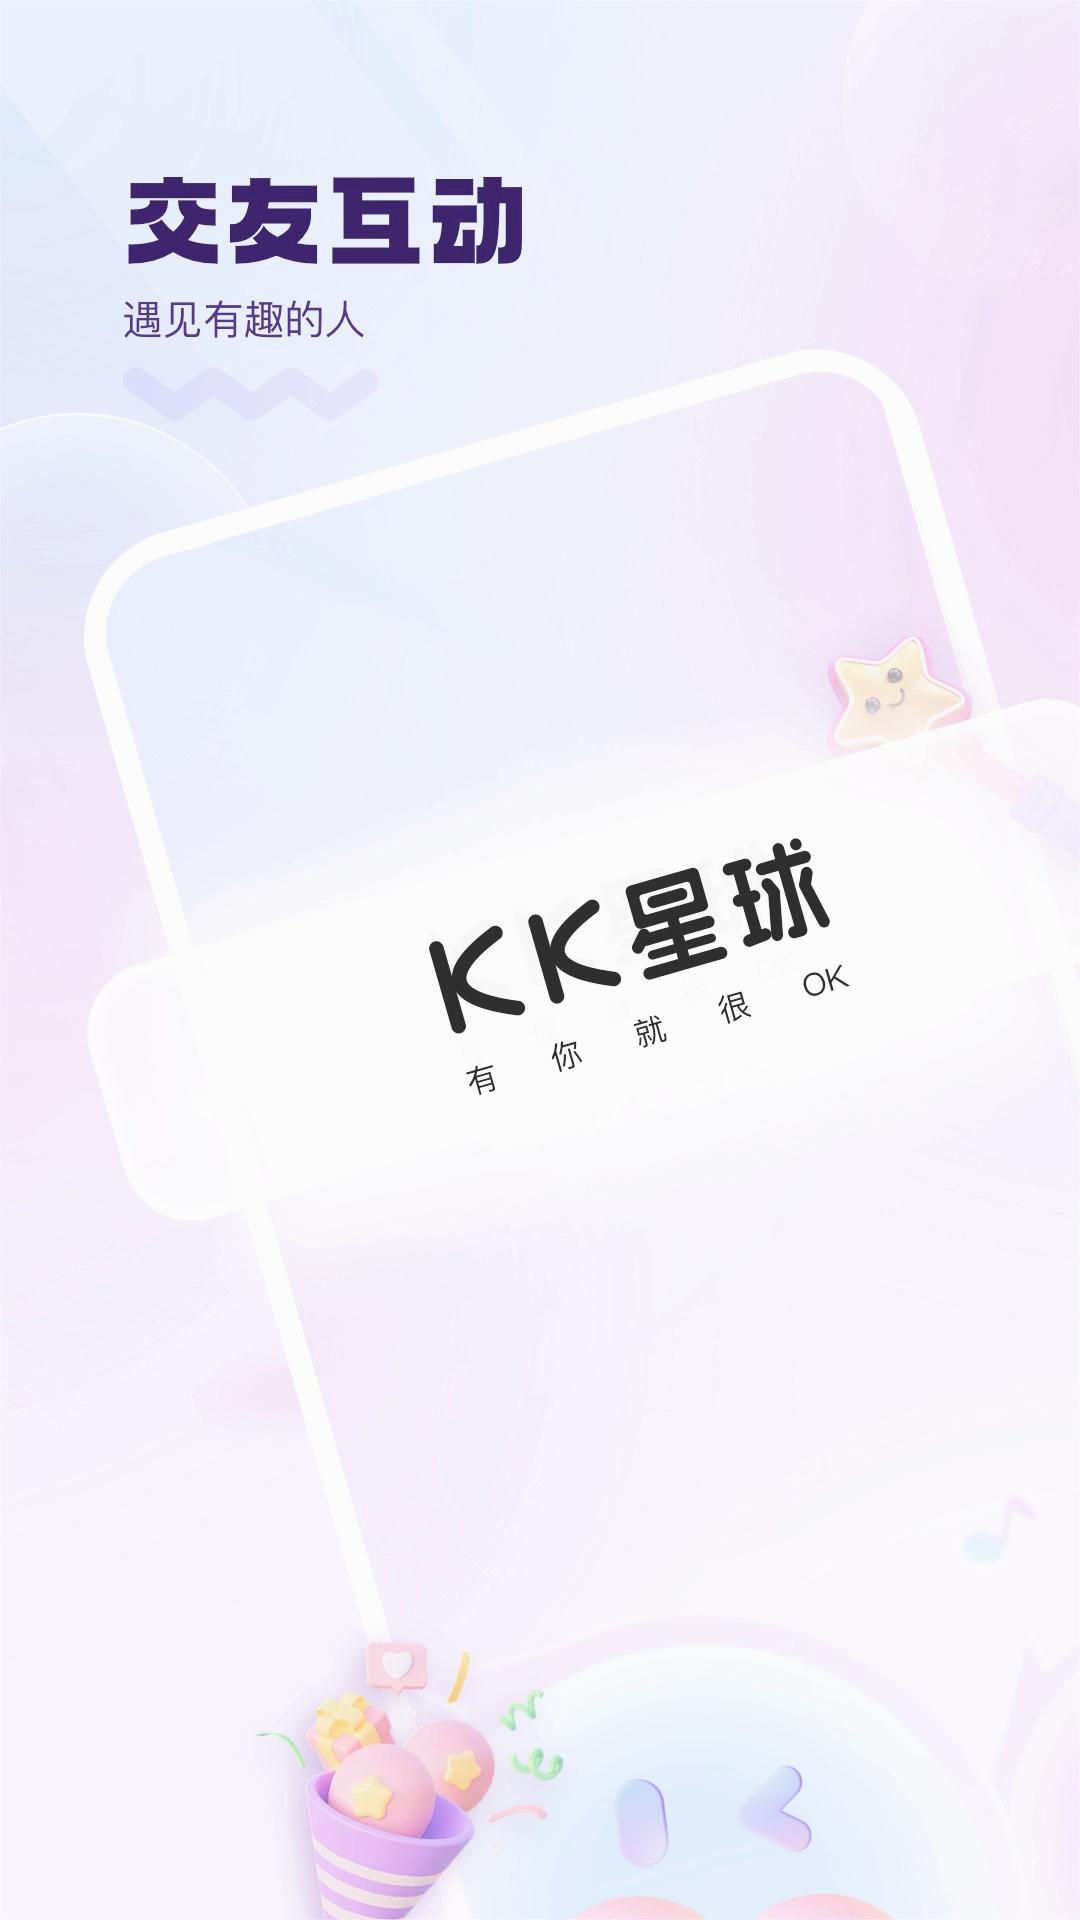 KK星球app